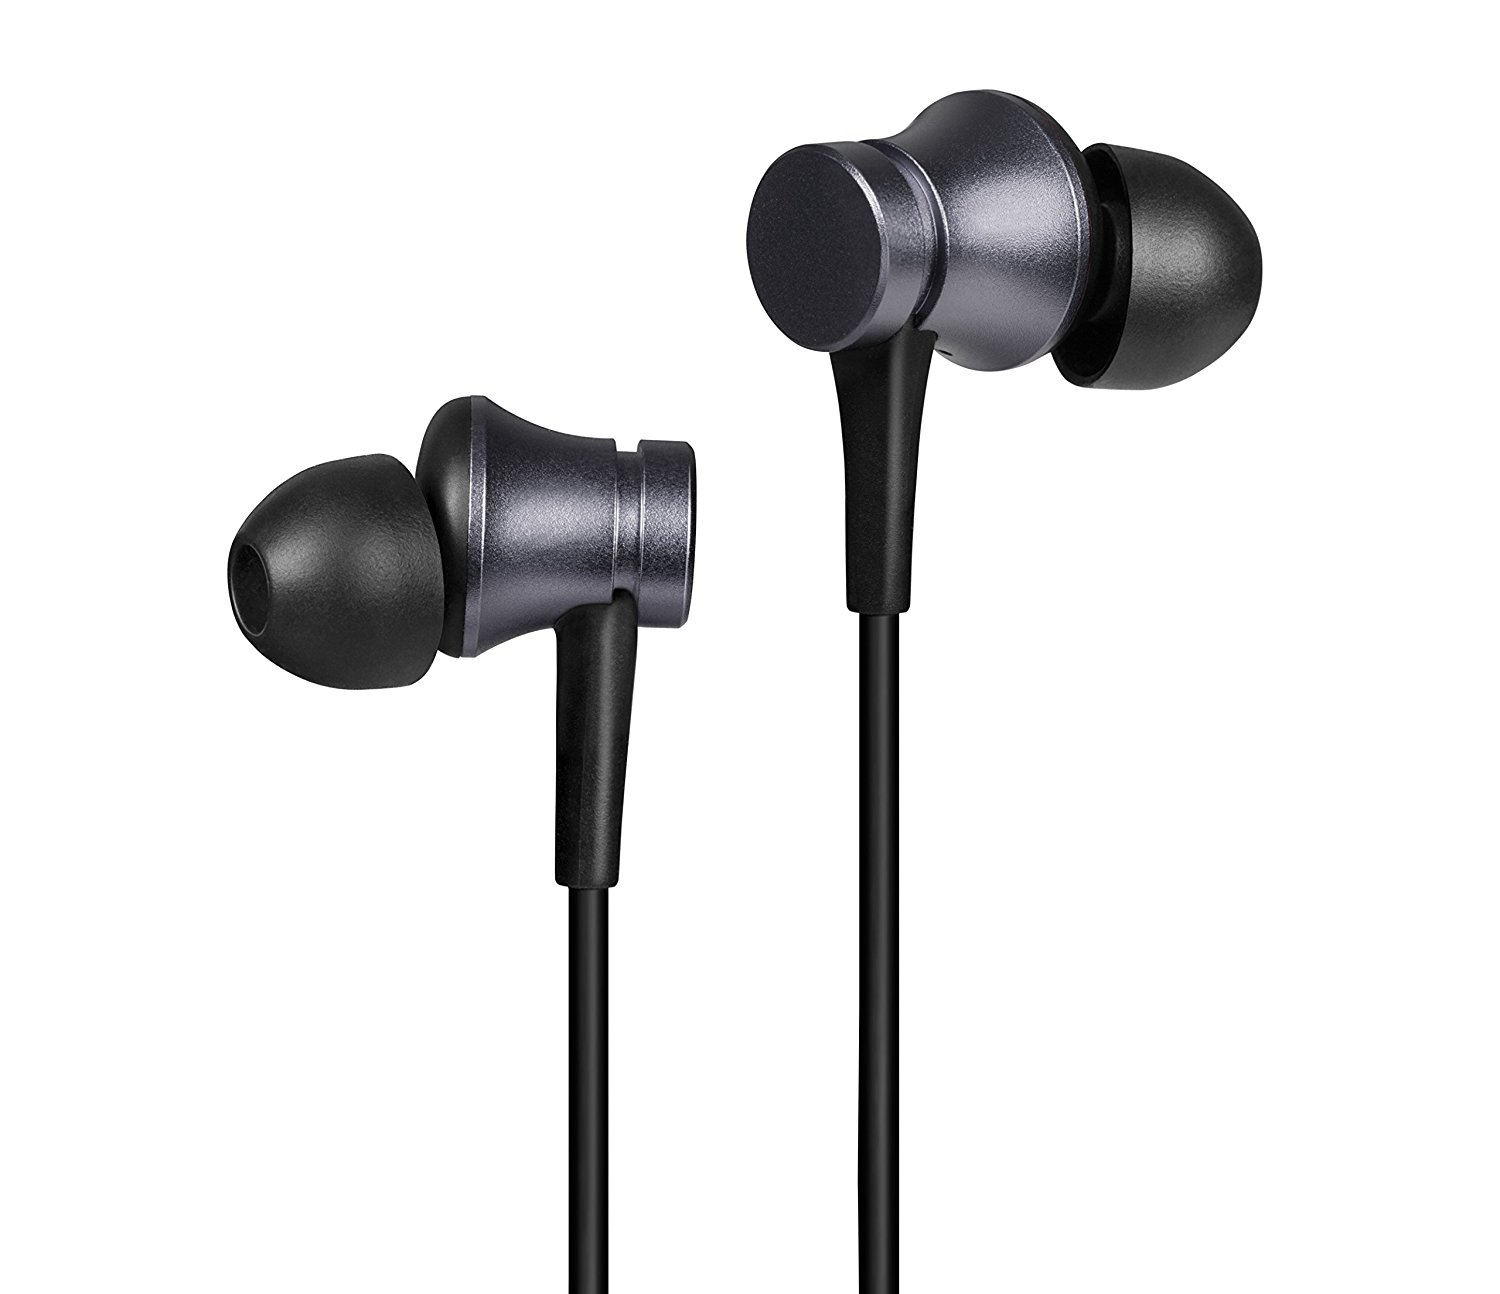 Amazon- Buy Mi Earphones Basic with Mic (Black) at Rs. 399